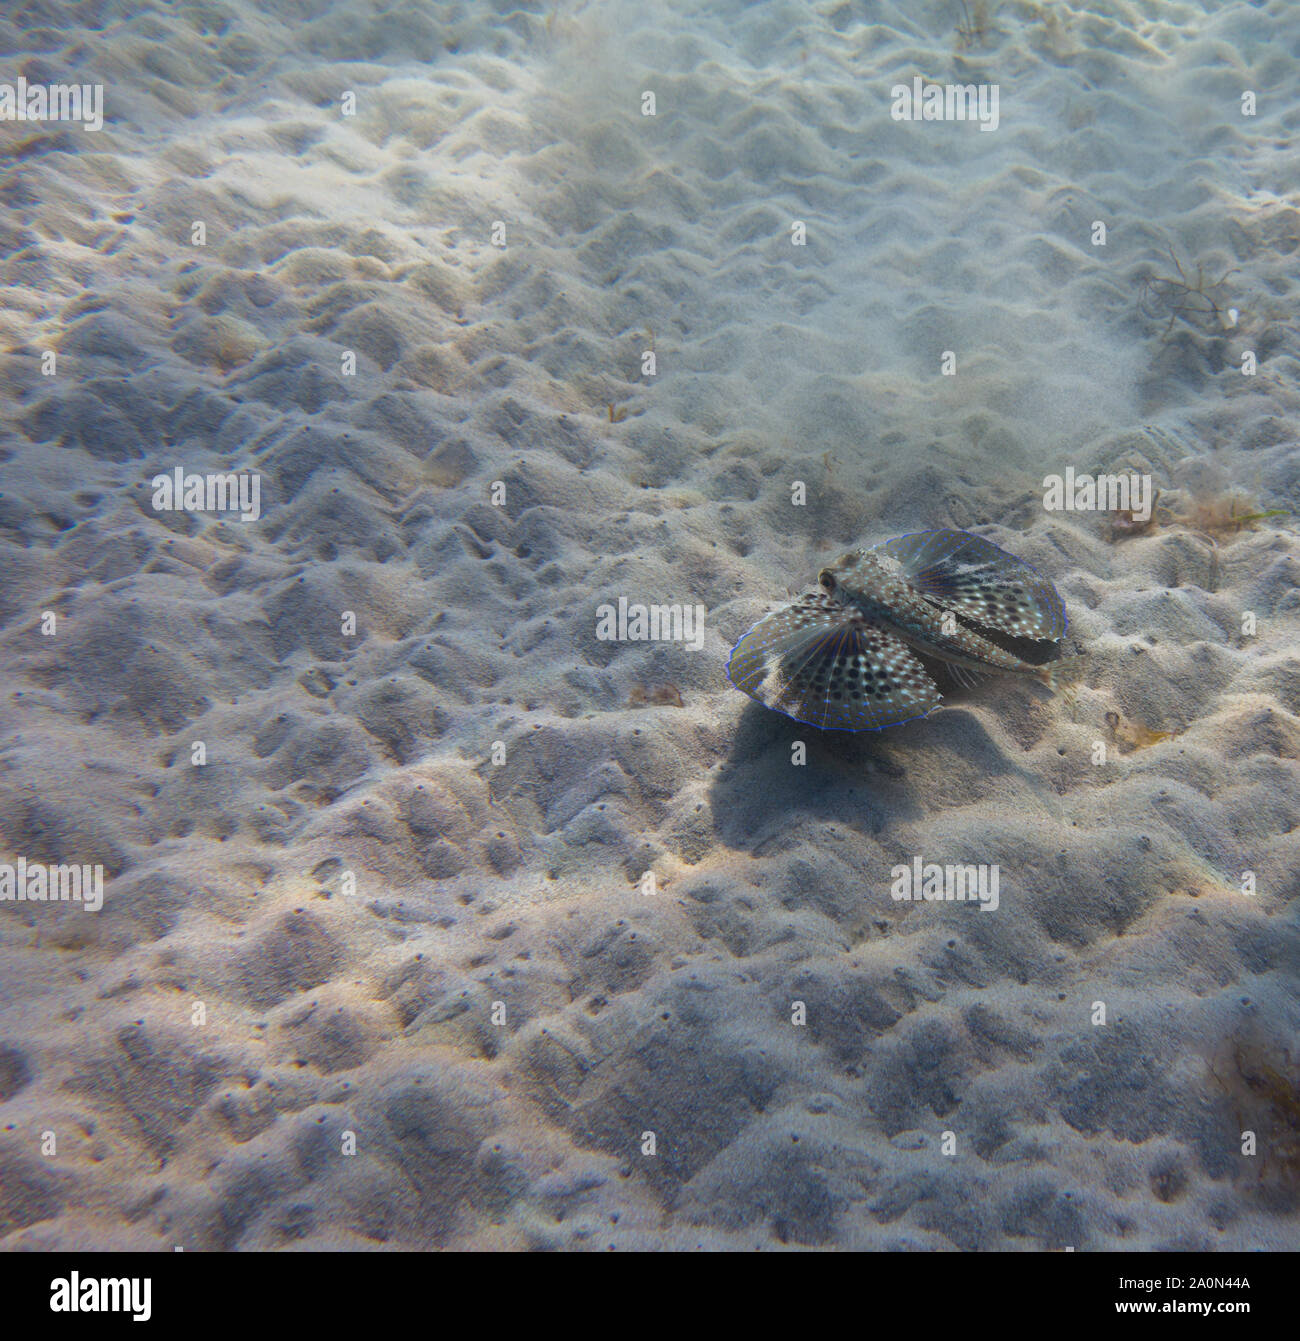 Flying gurnard, Dactylus volitans, on sandy seafloor in the Medtierranean Sea. Stock Photo